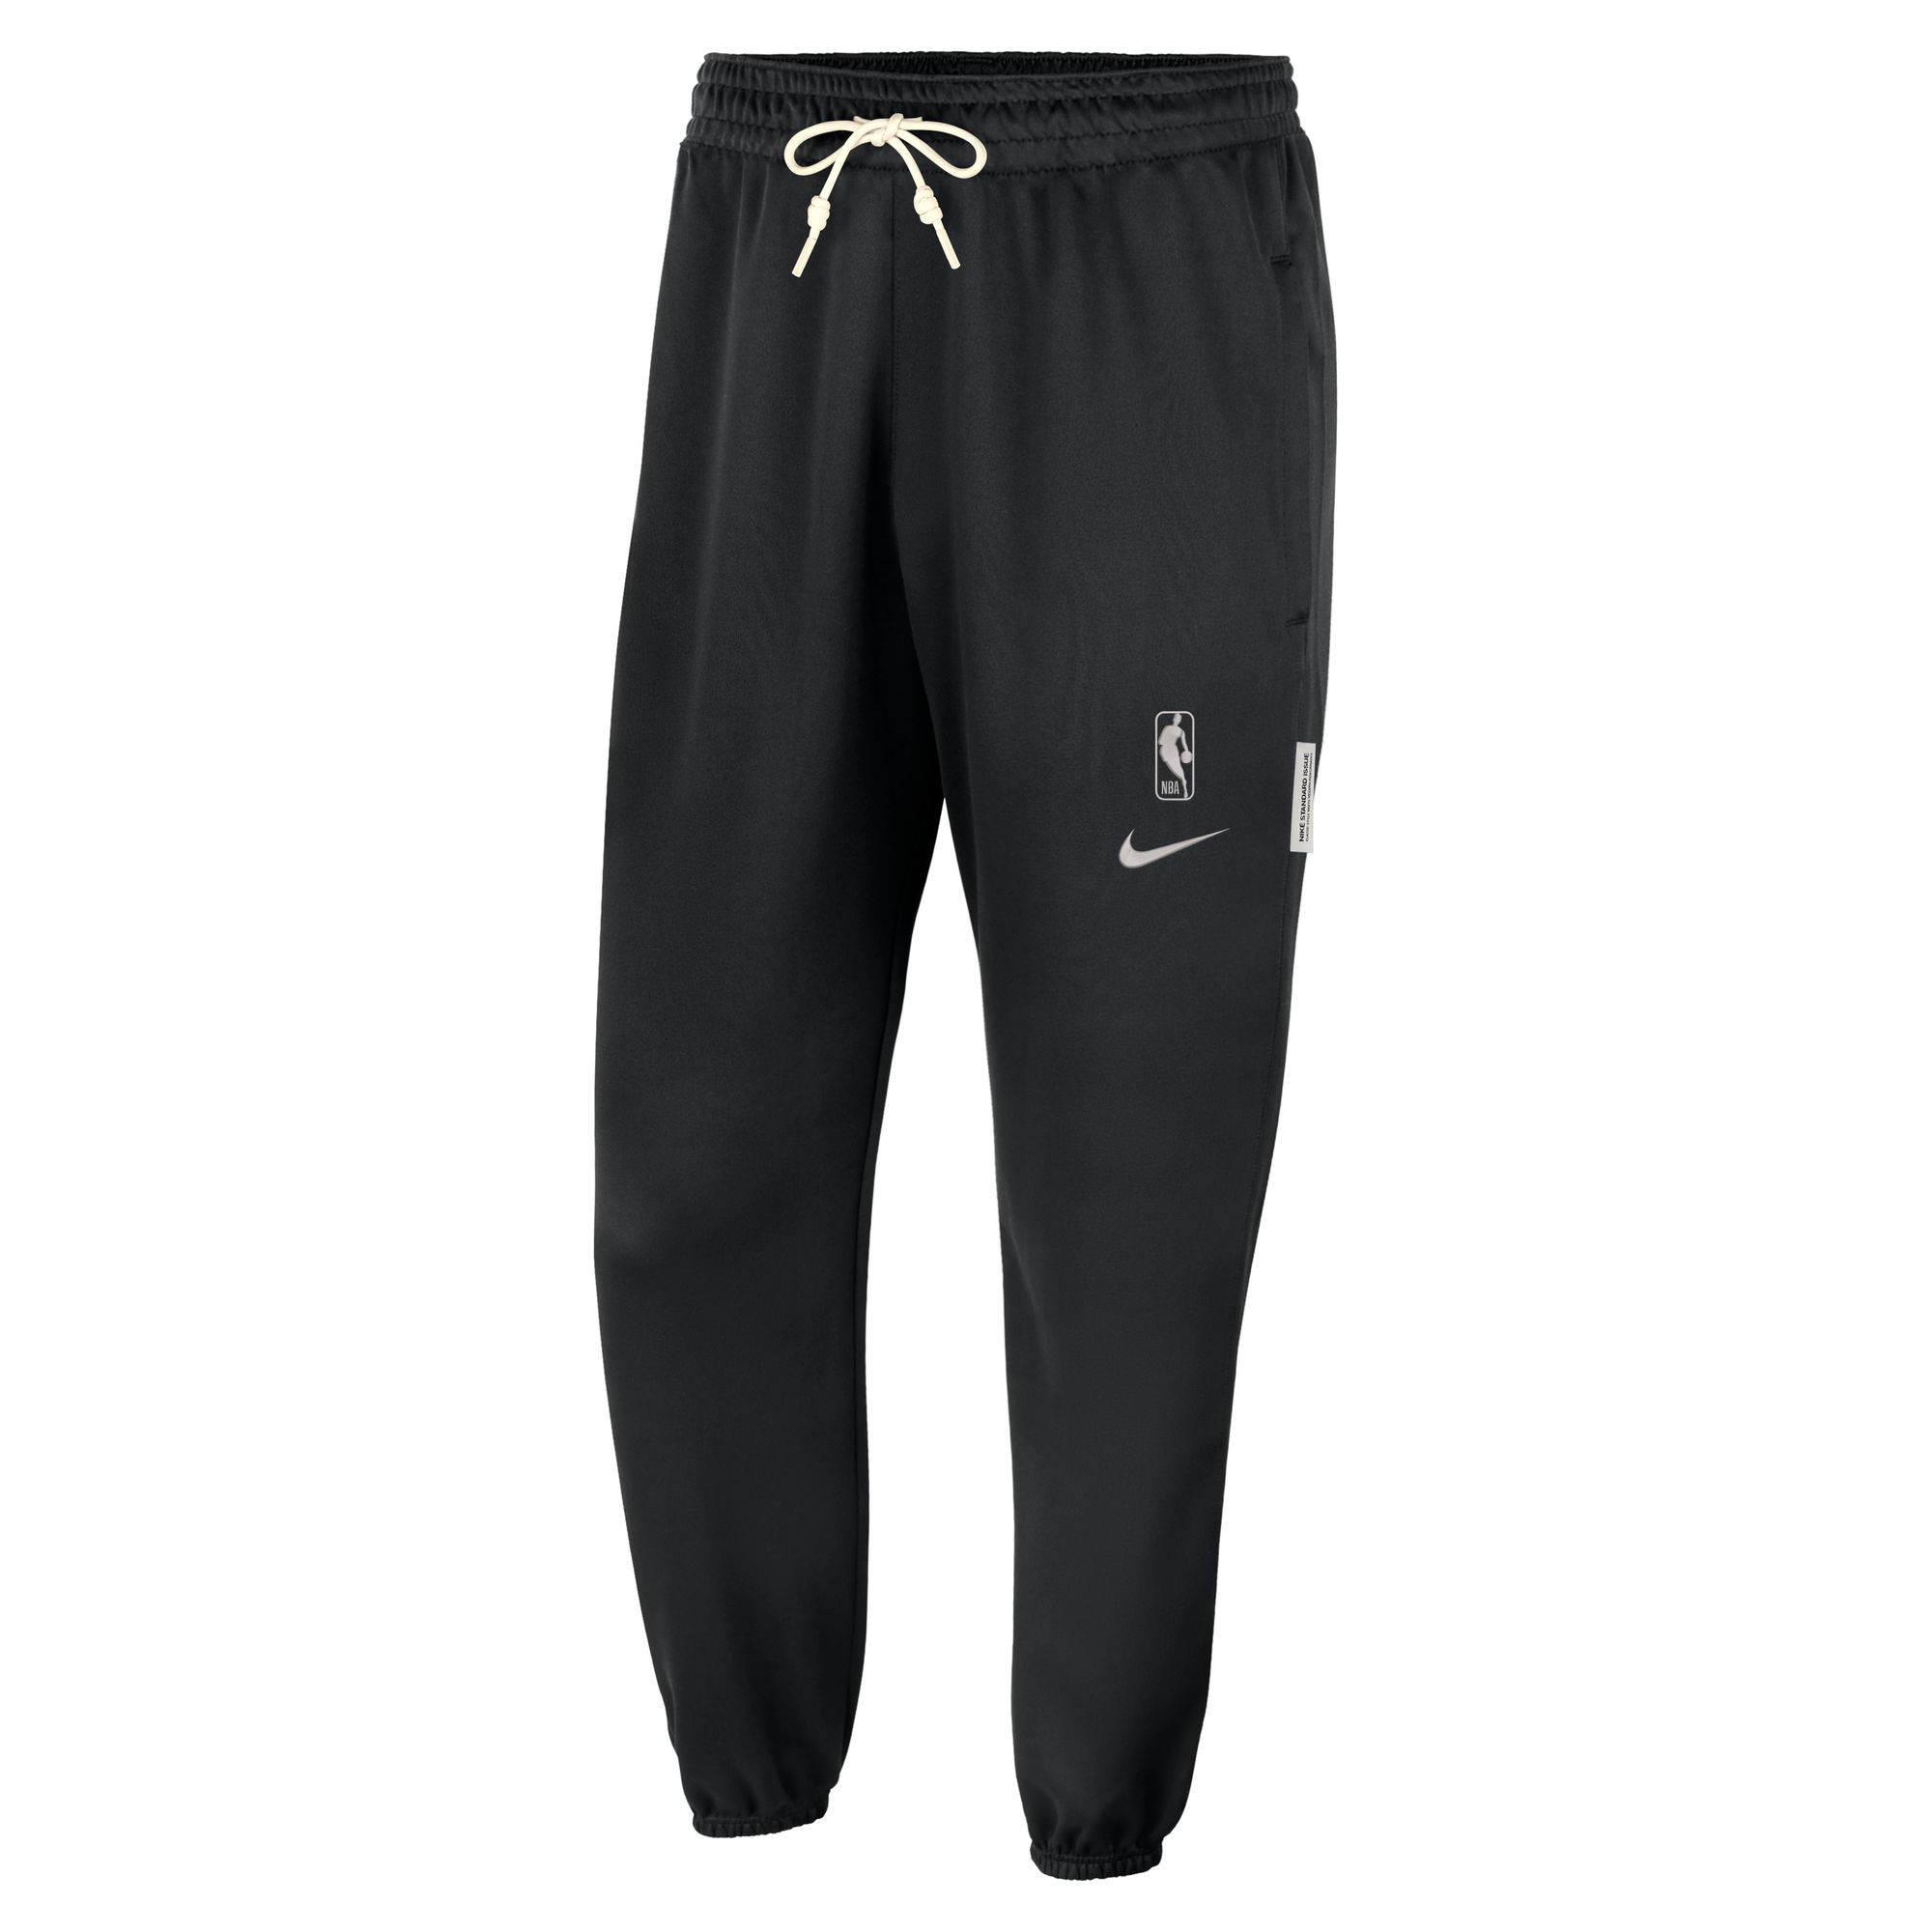 Pantalon de basketball Nike Team 31 Standard Issue - Black/Pale Ivory/Lt Iron Ore